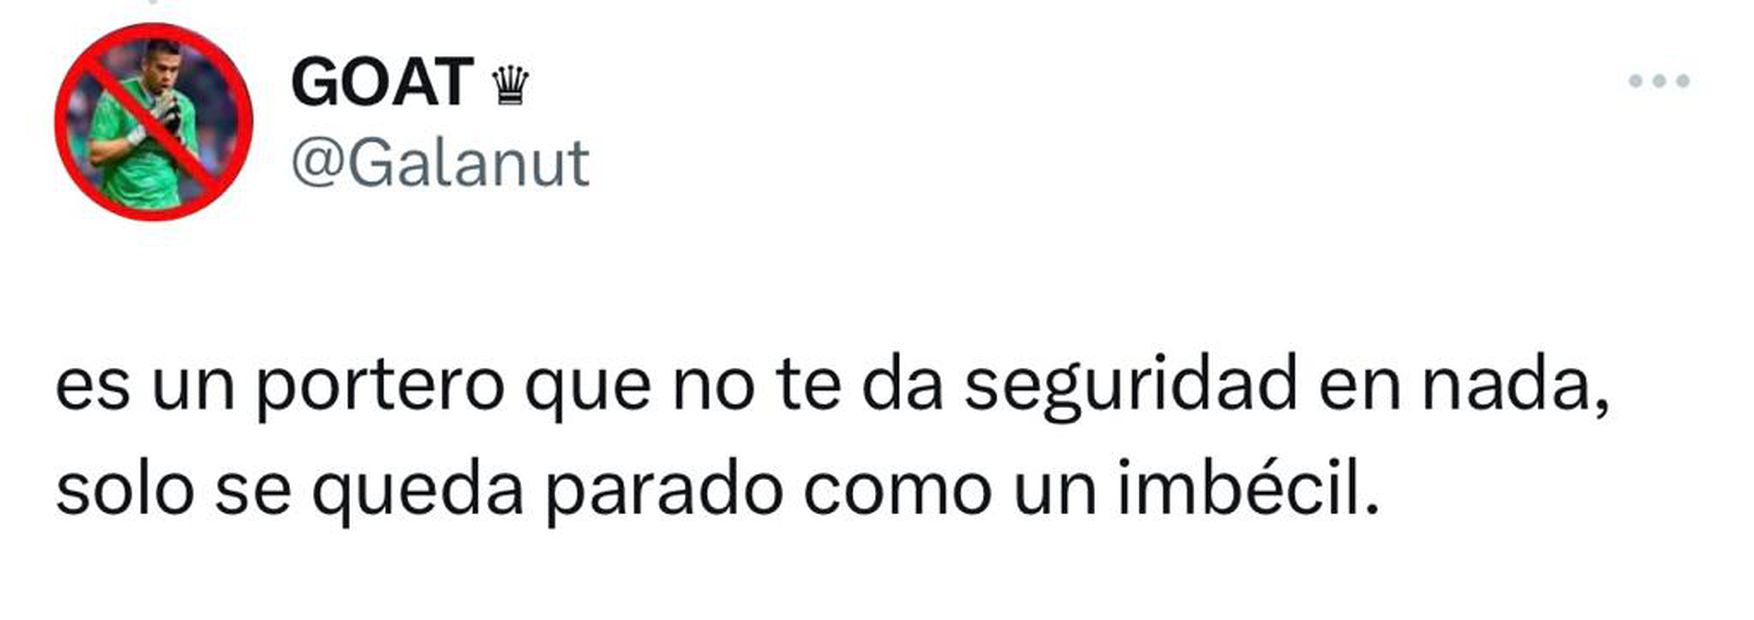 Tweets de Miguel 'Wacho' Jiménez